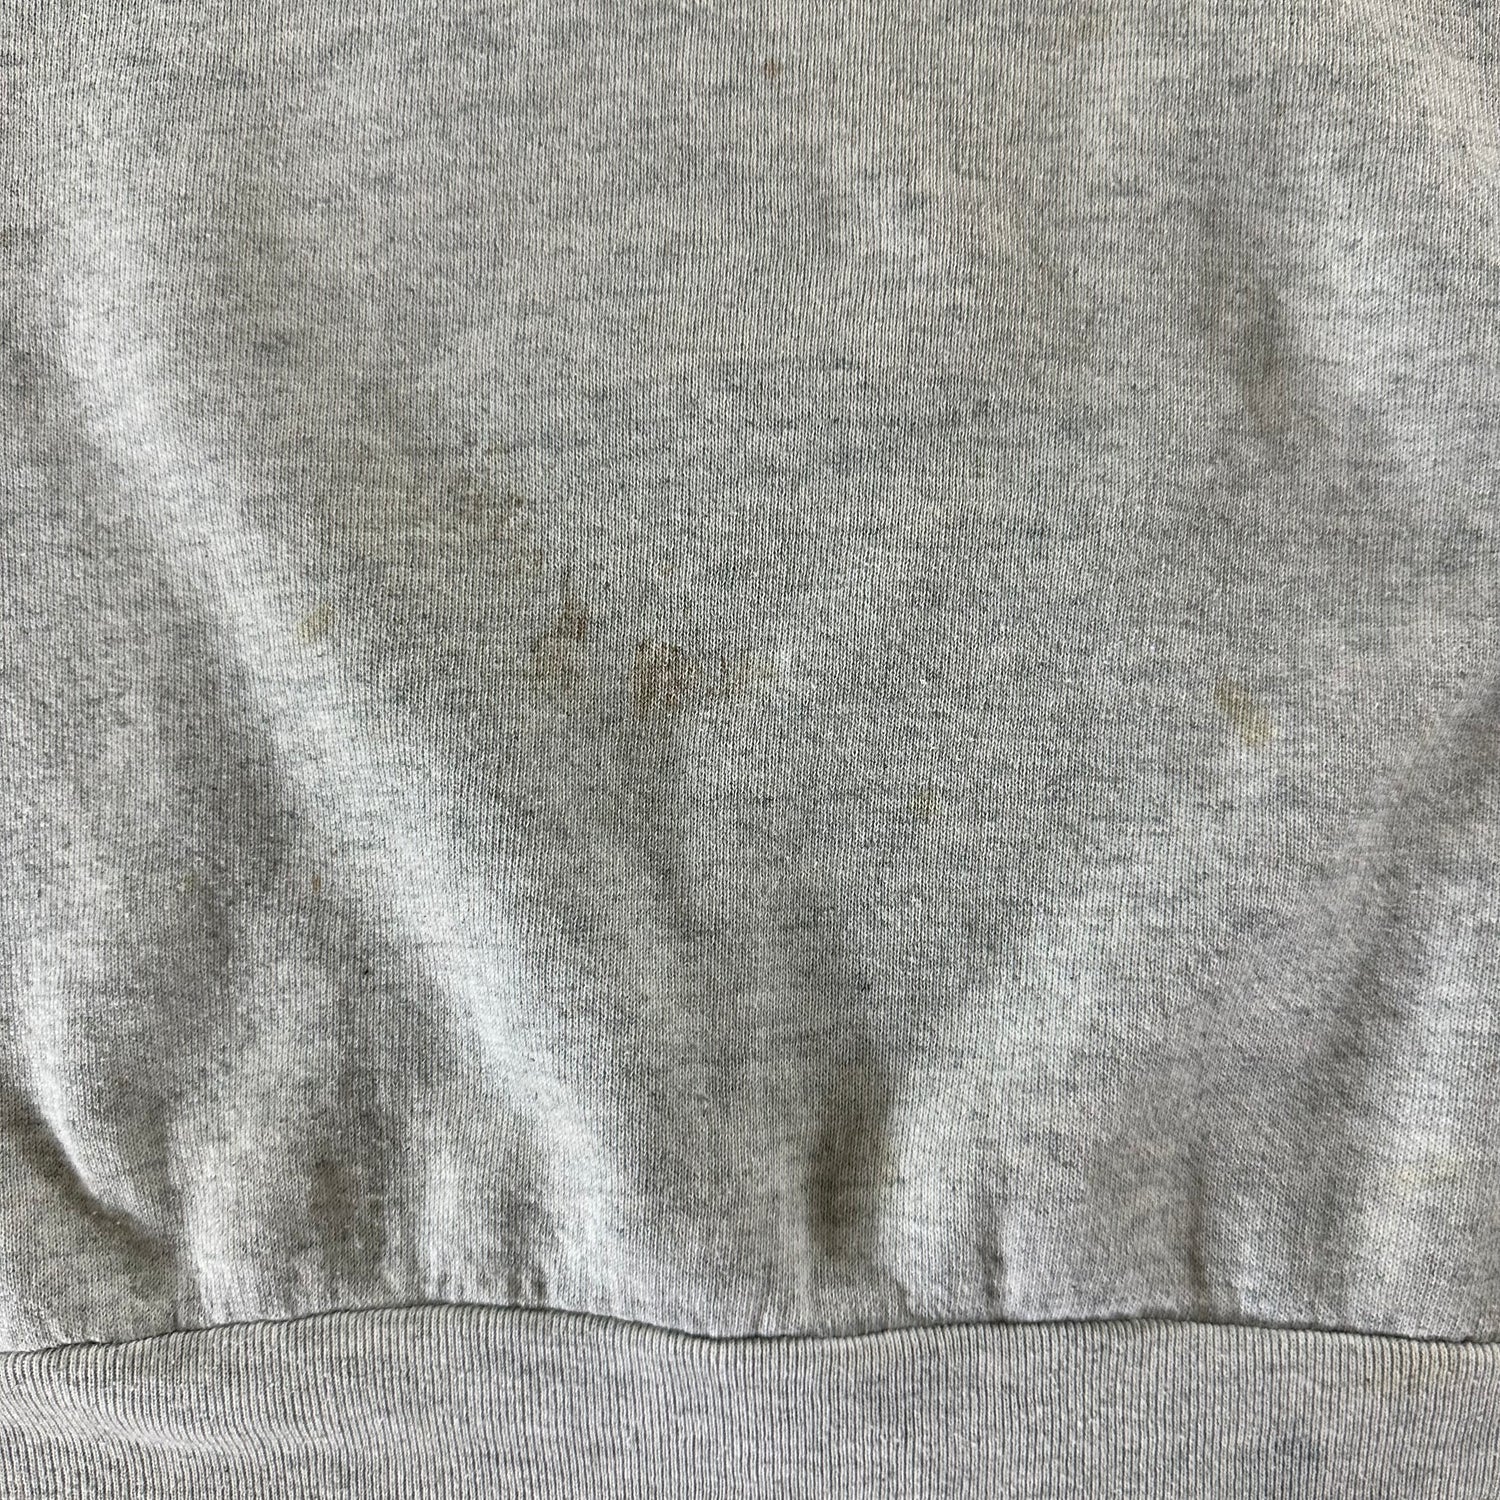 Vintage 1990s Breckenridge Sweatshirt size Large